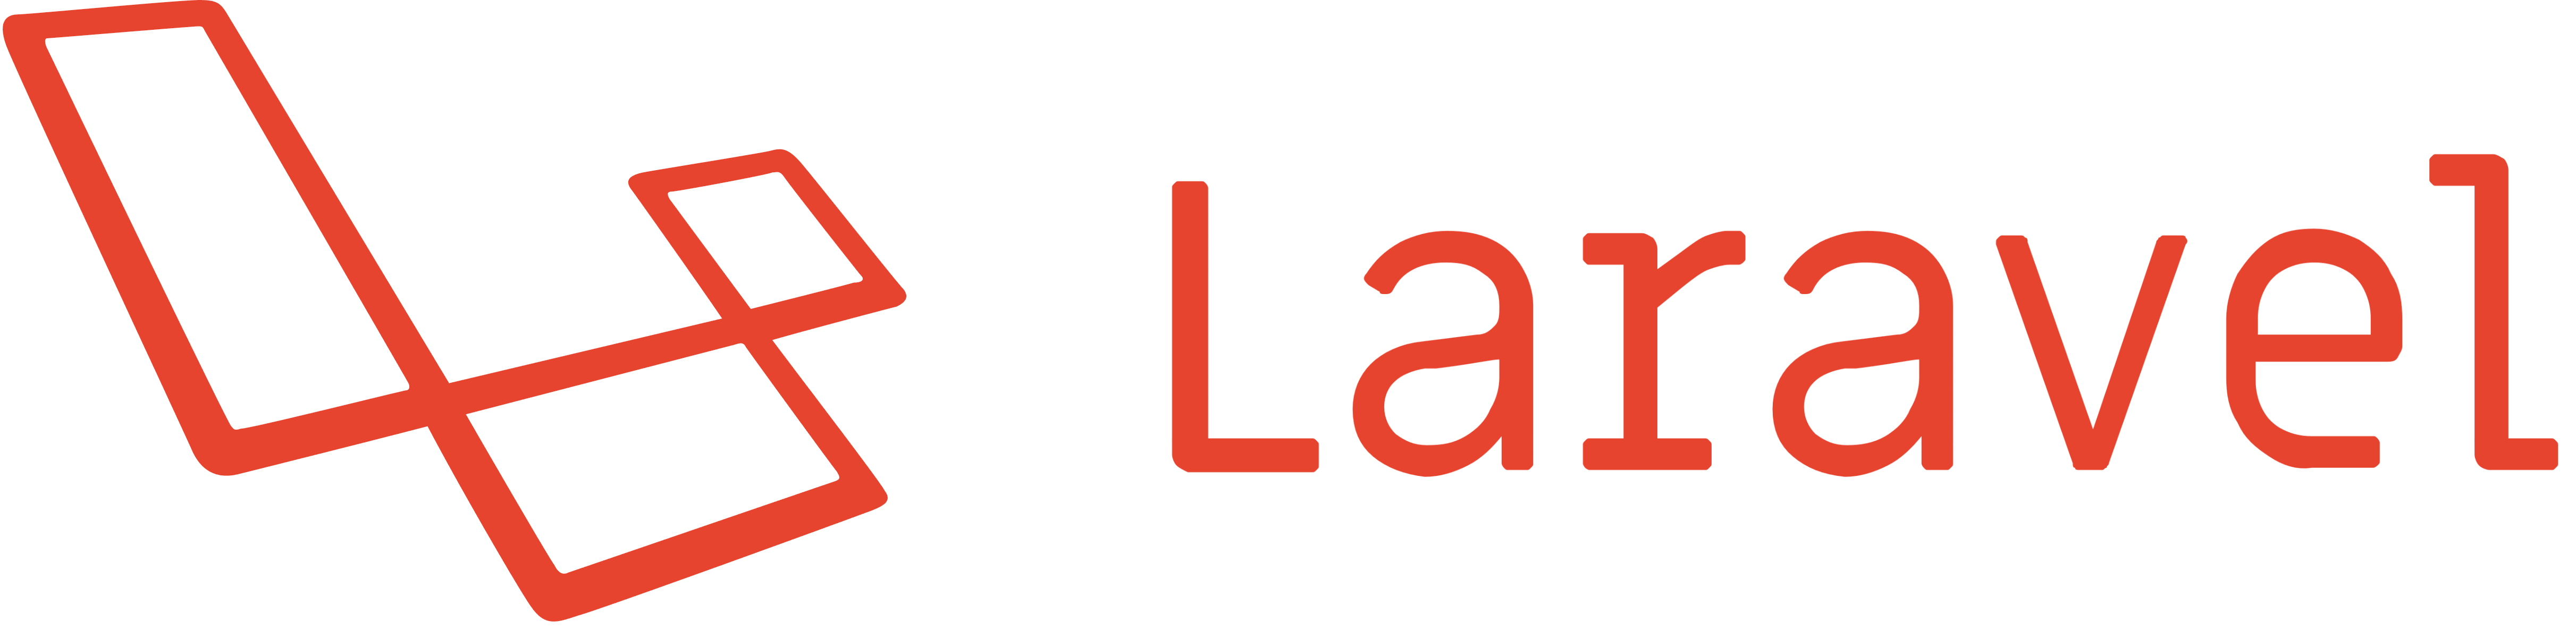 Laravel – Logos Download - Laravel, Transparent background PNG HD thumbnail